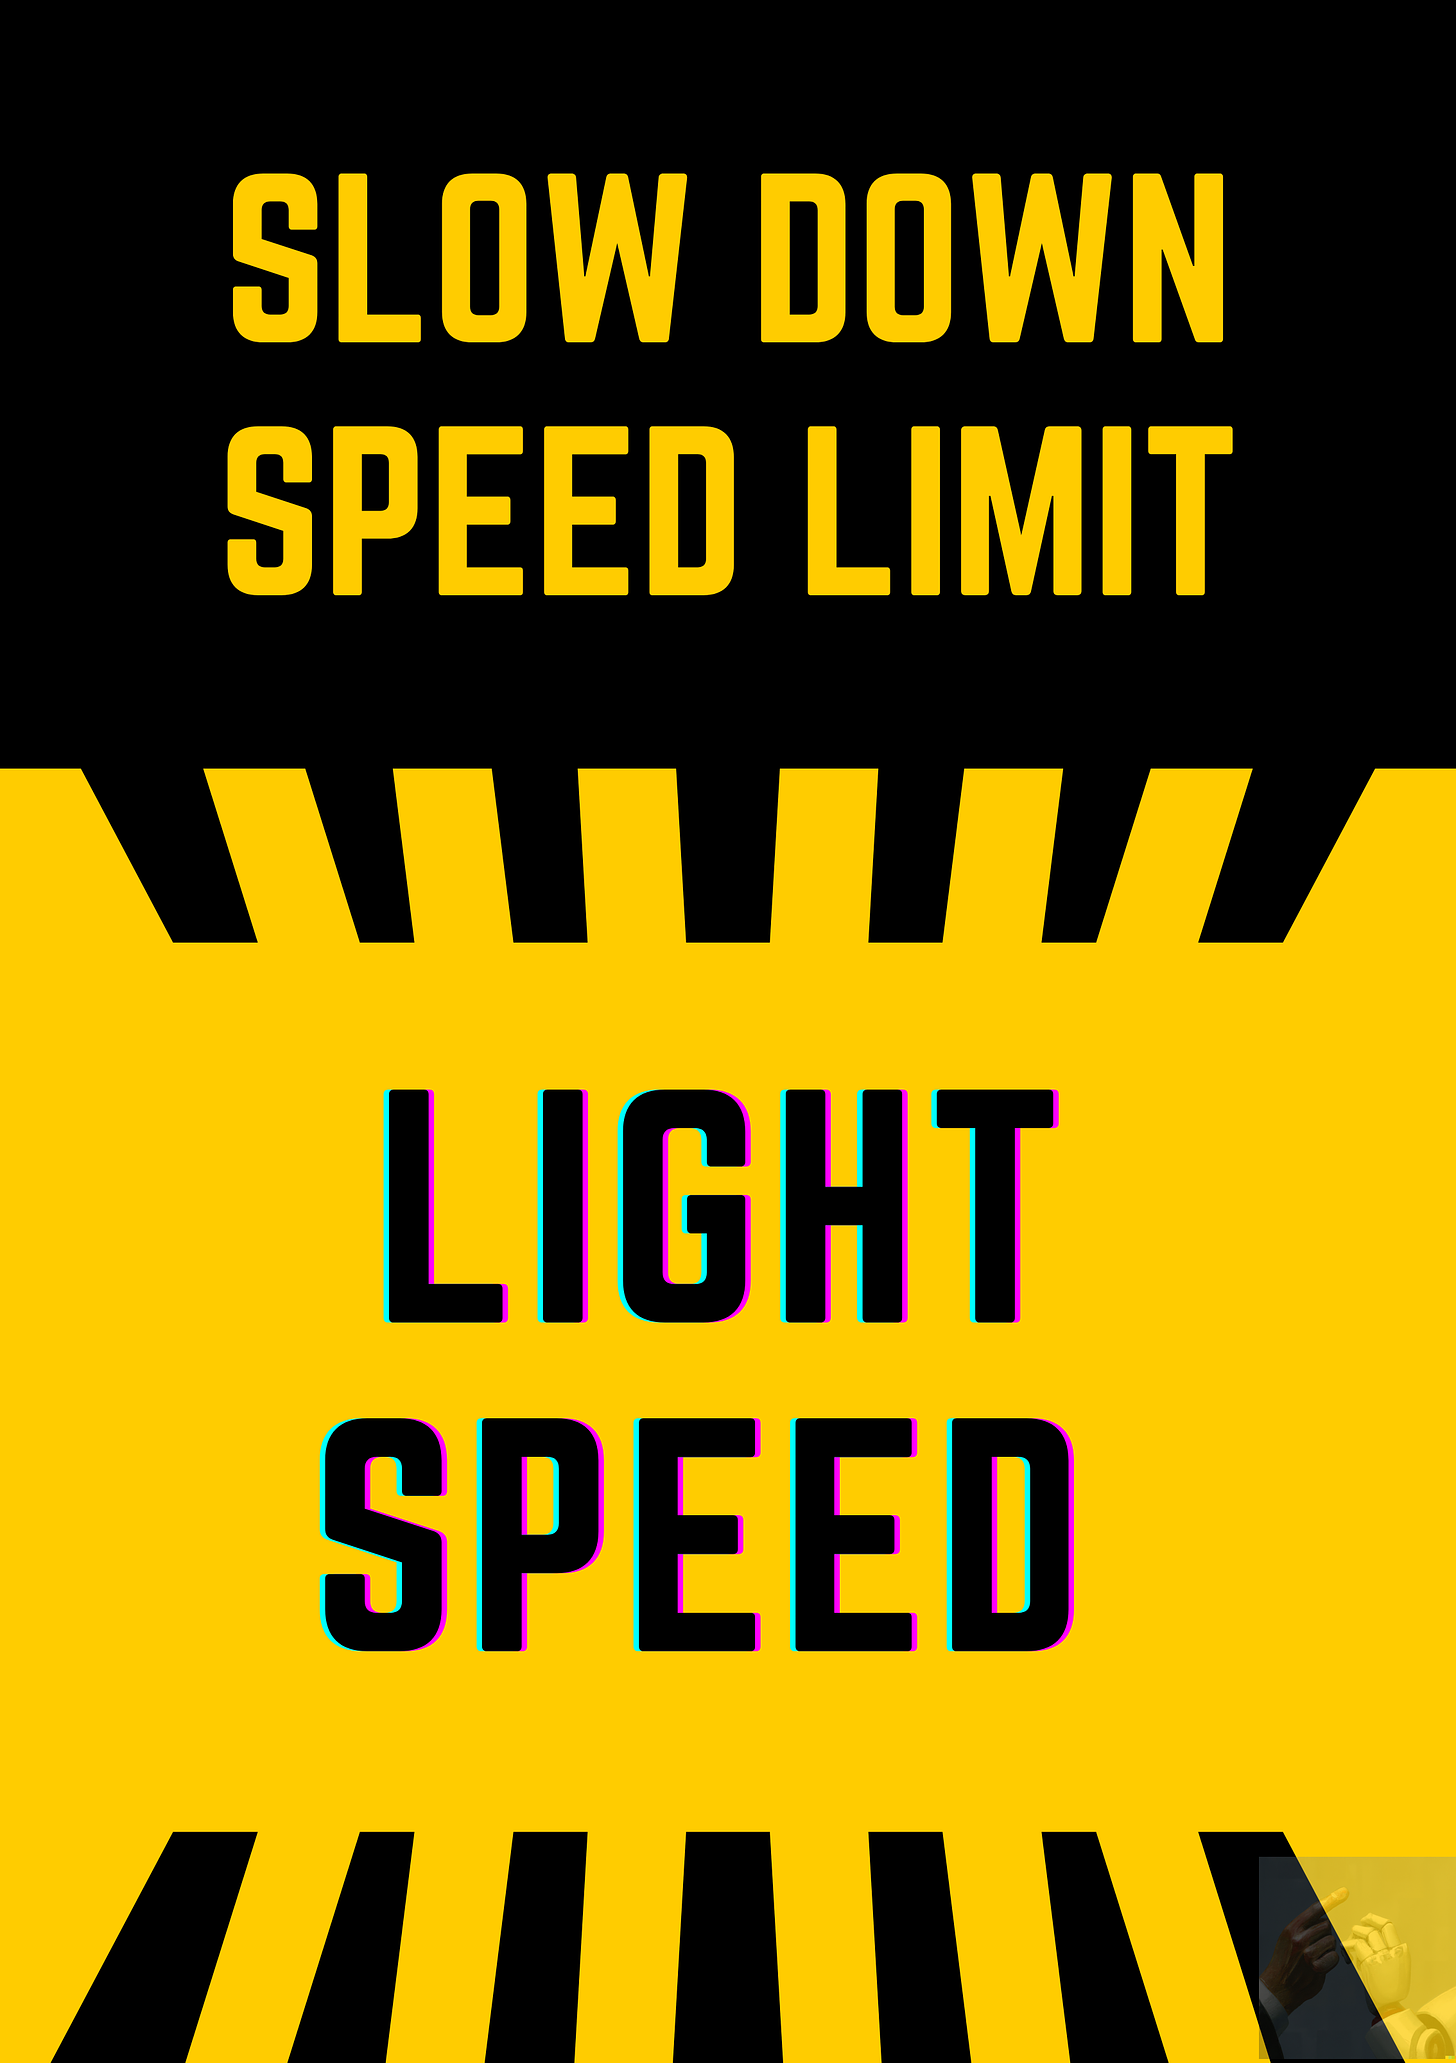 Sign: Speed Limit - Light Speed